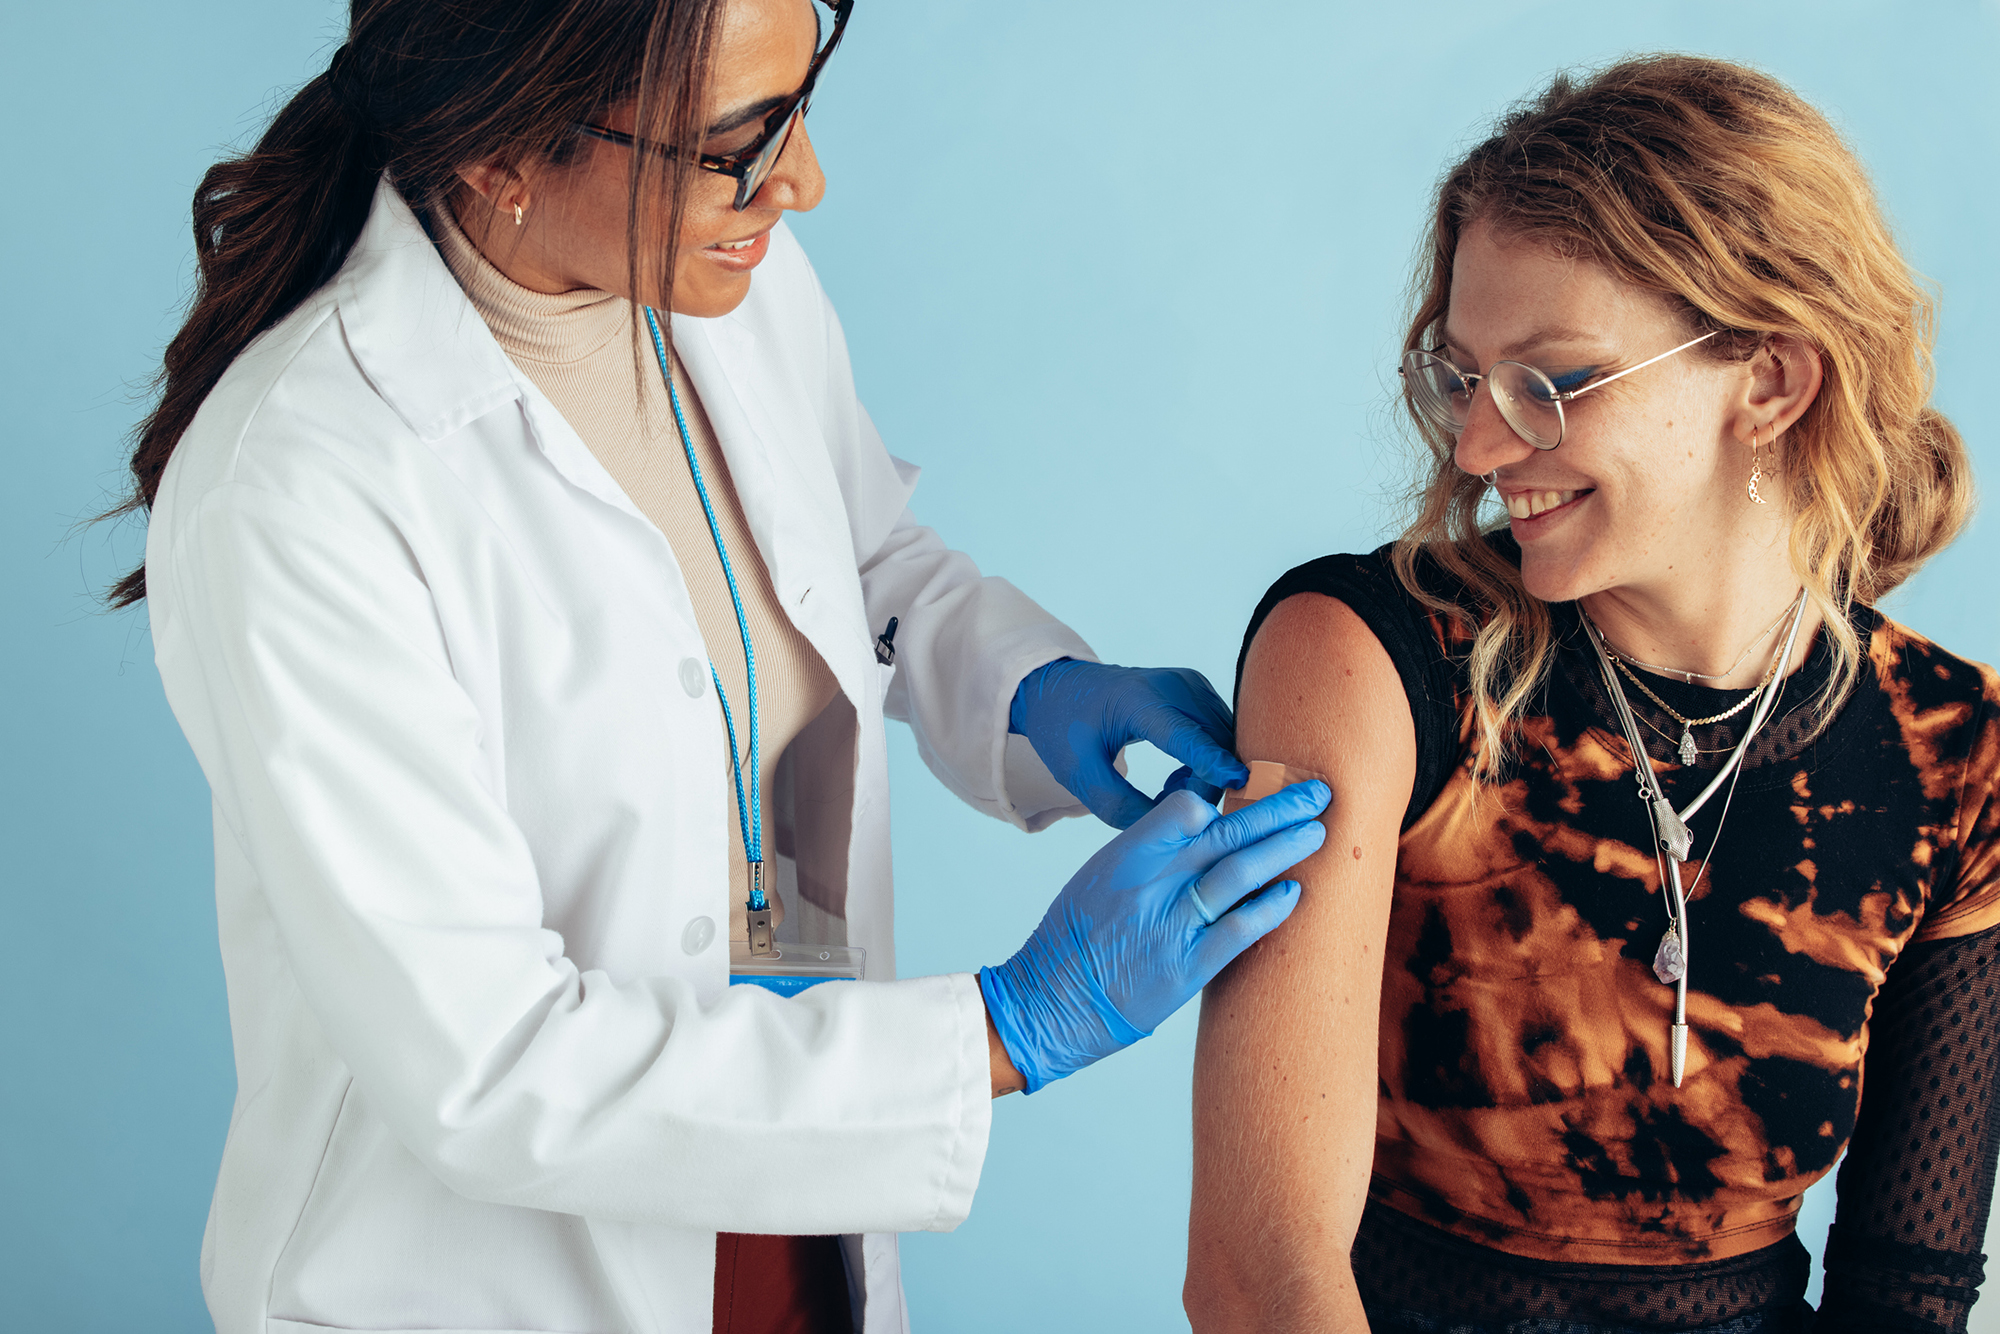 A person getting a vaccine shot.